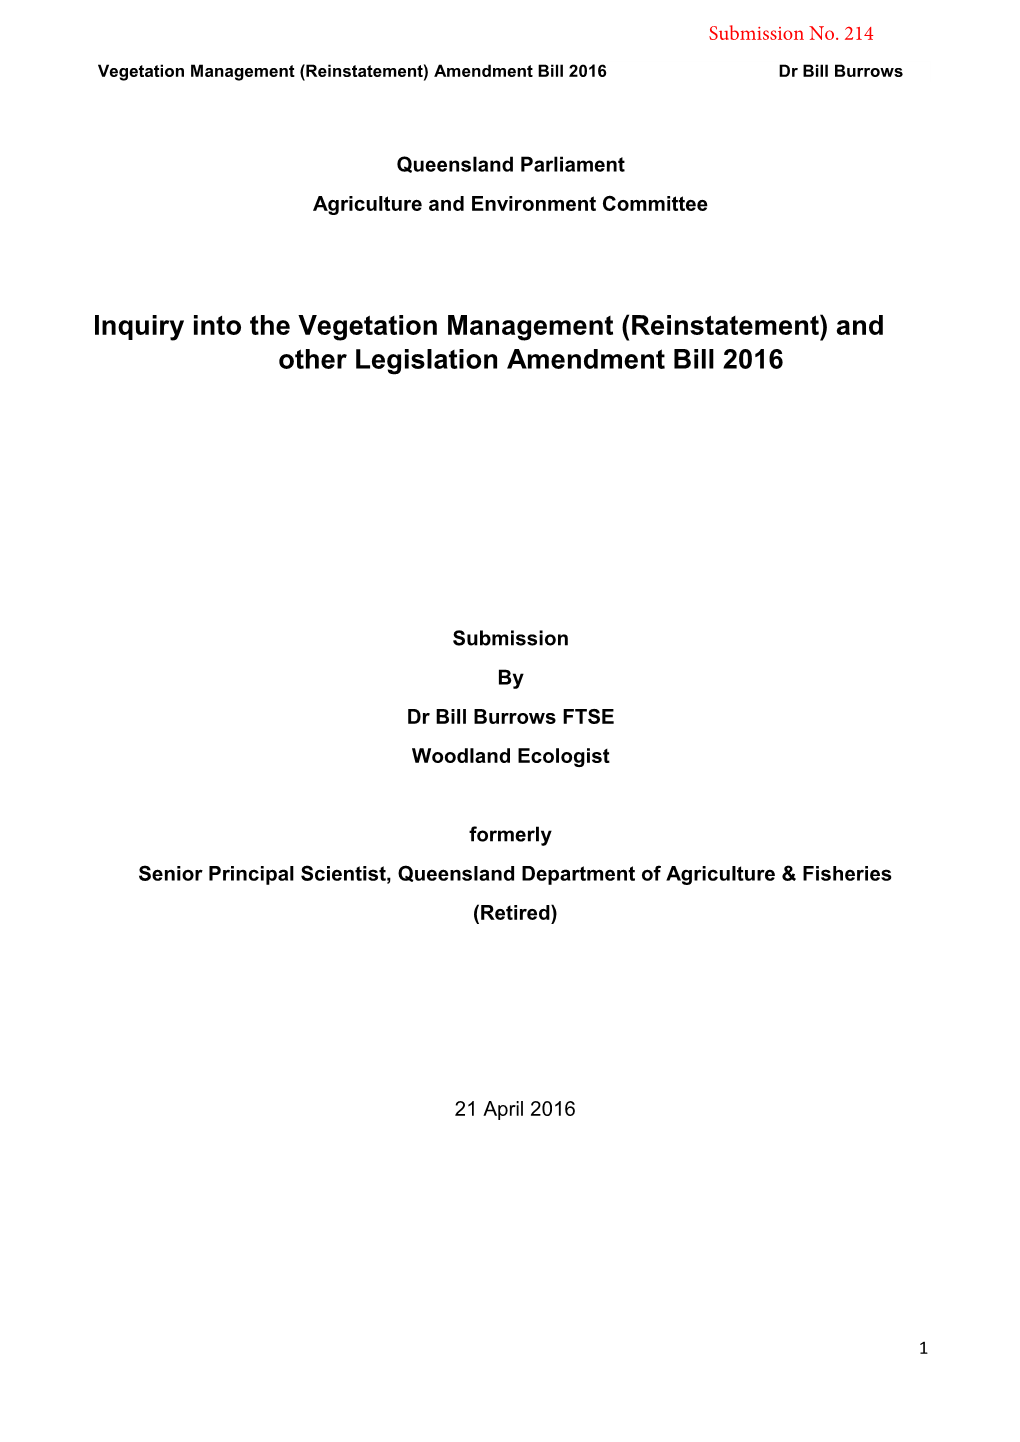 Inquiry Into the Vegetation Management (Reinstatement) and Other Legislation Amendment Bill 2016